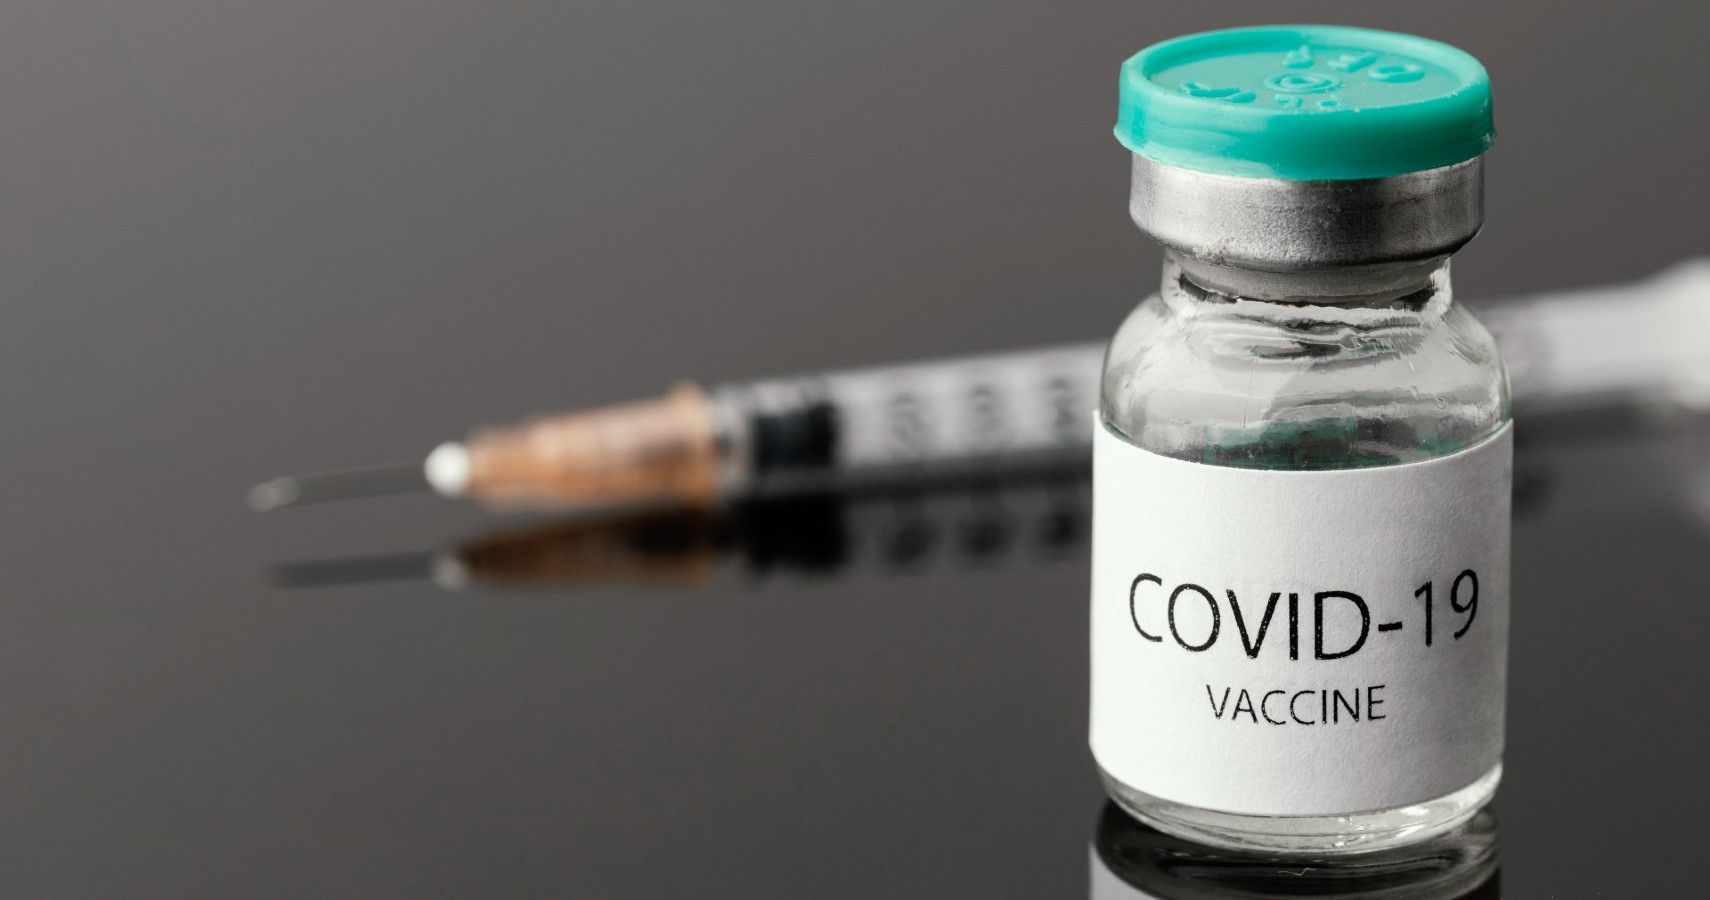 corona-vaccination-health-liquid-eye-cosmetics-1640981-pxhere.com (1)